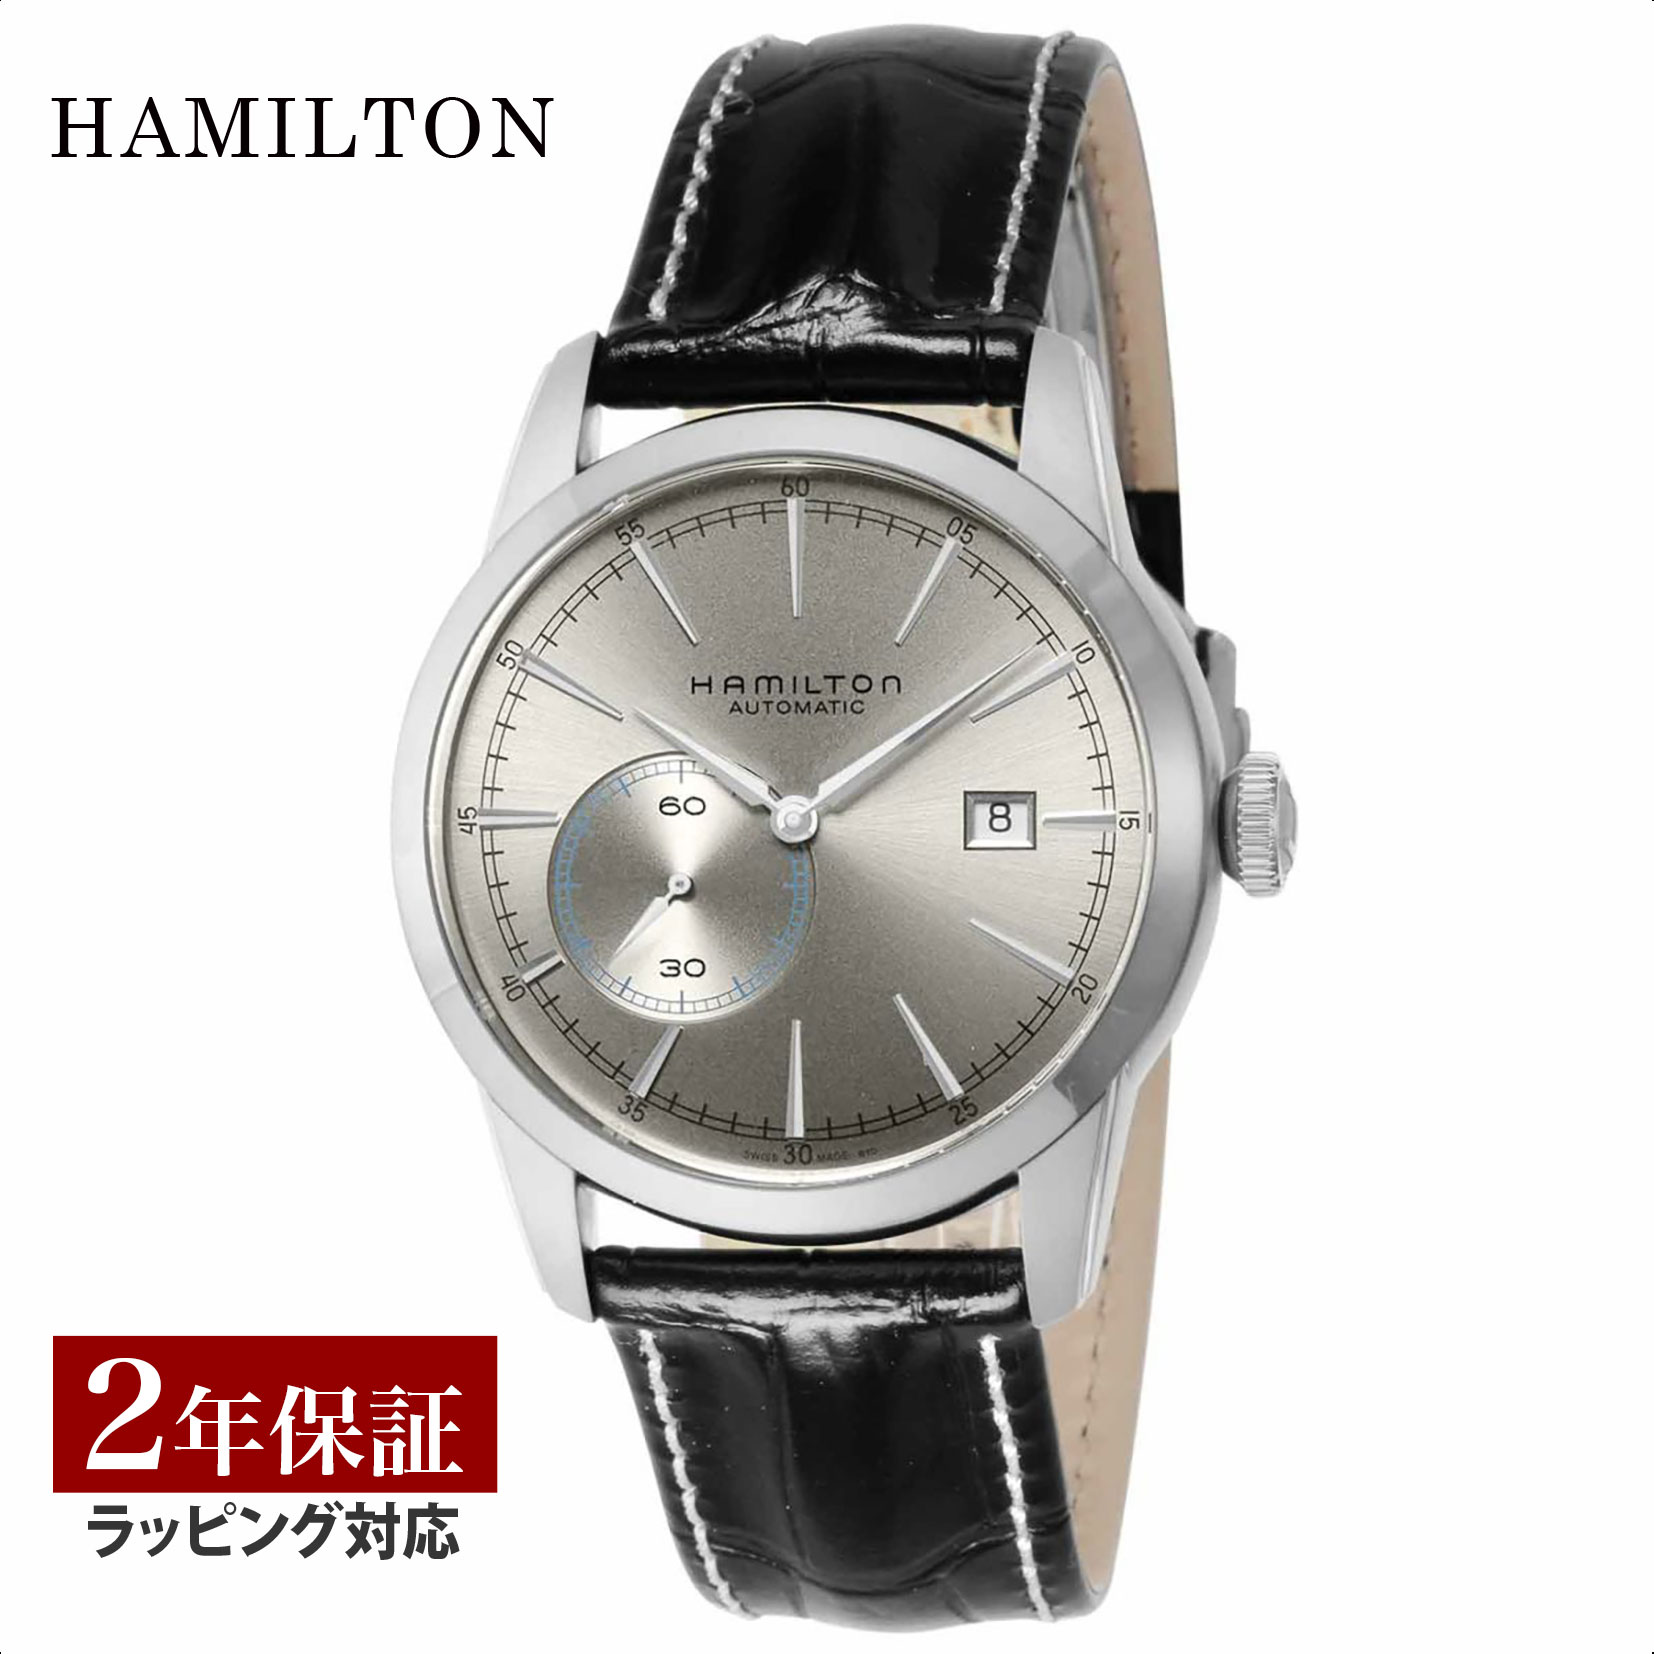 HAMILTON ハミルトン レイルロード 自動巻 メンズ シルバー H40515781 時計 腕時計 高級腕時計 ブランド